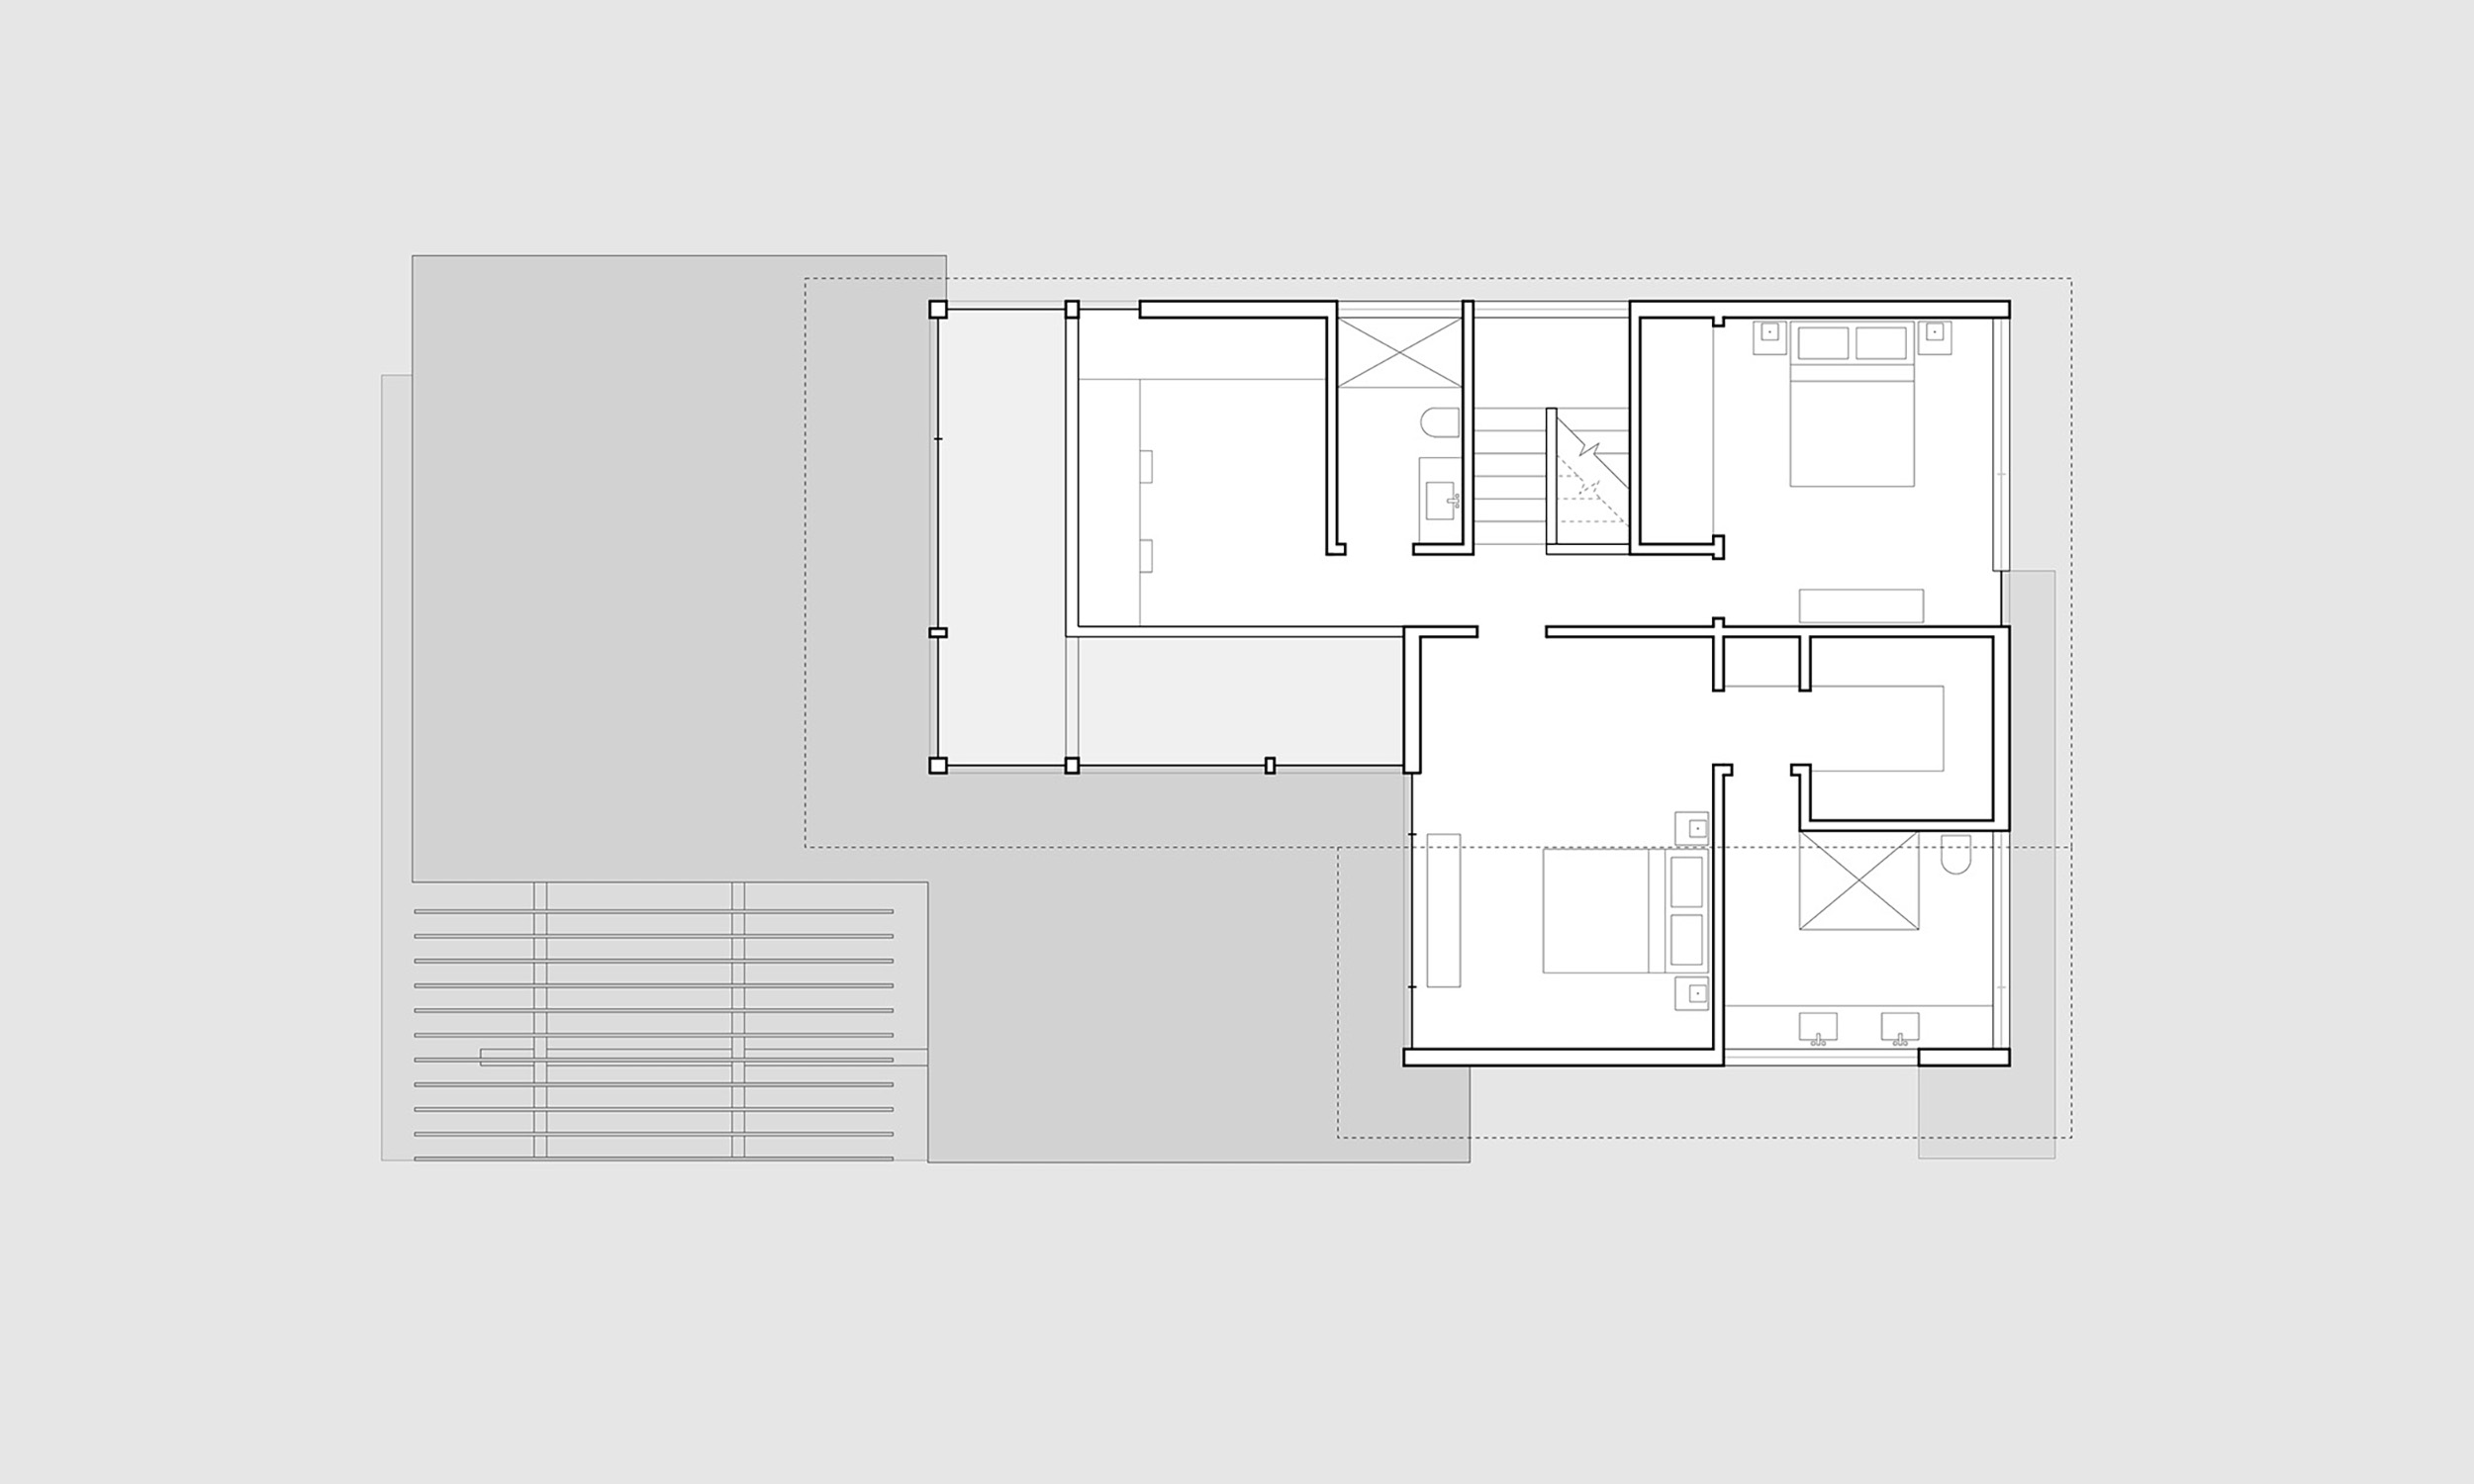 Graphic plan for Turkel Design's Axiom 2340 upper level